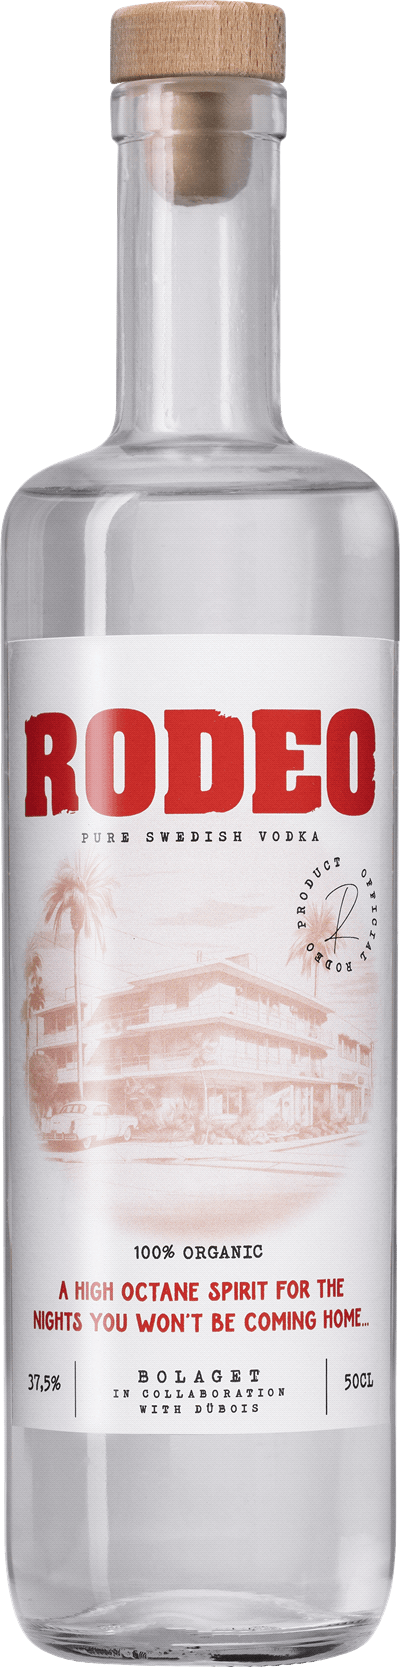 RODEO Pure Swedish Vodka